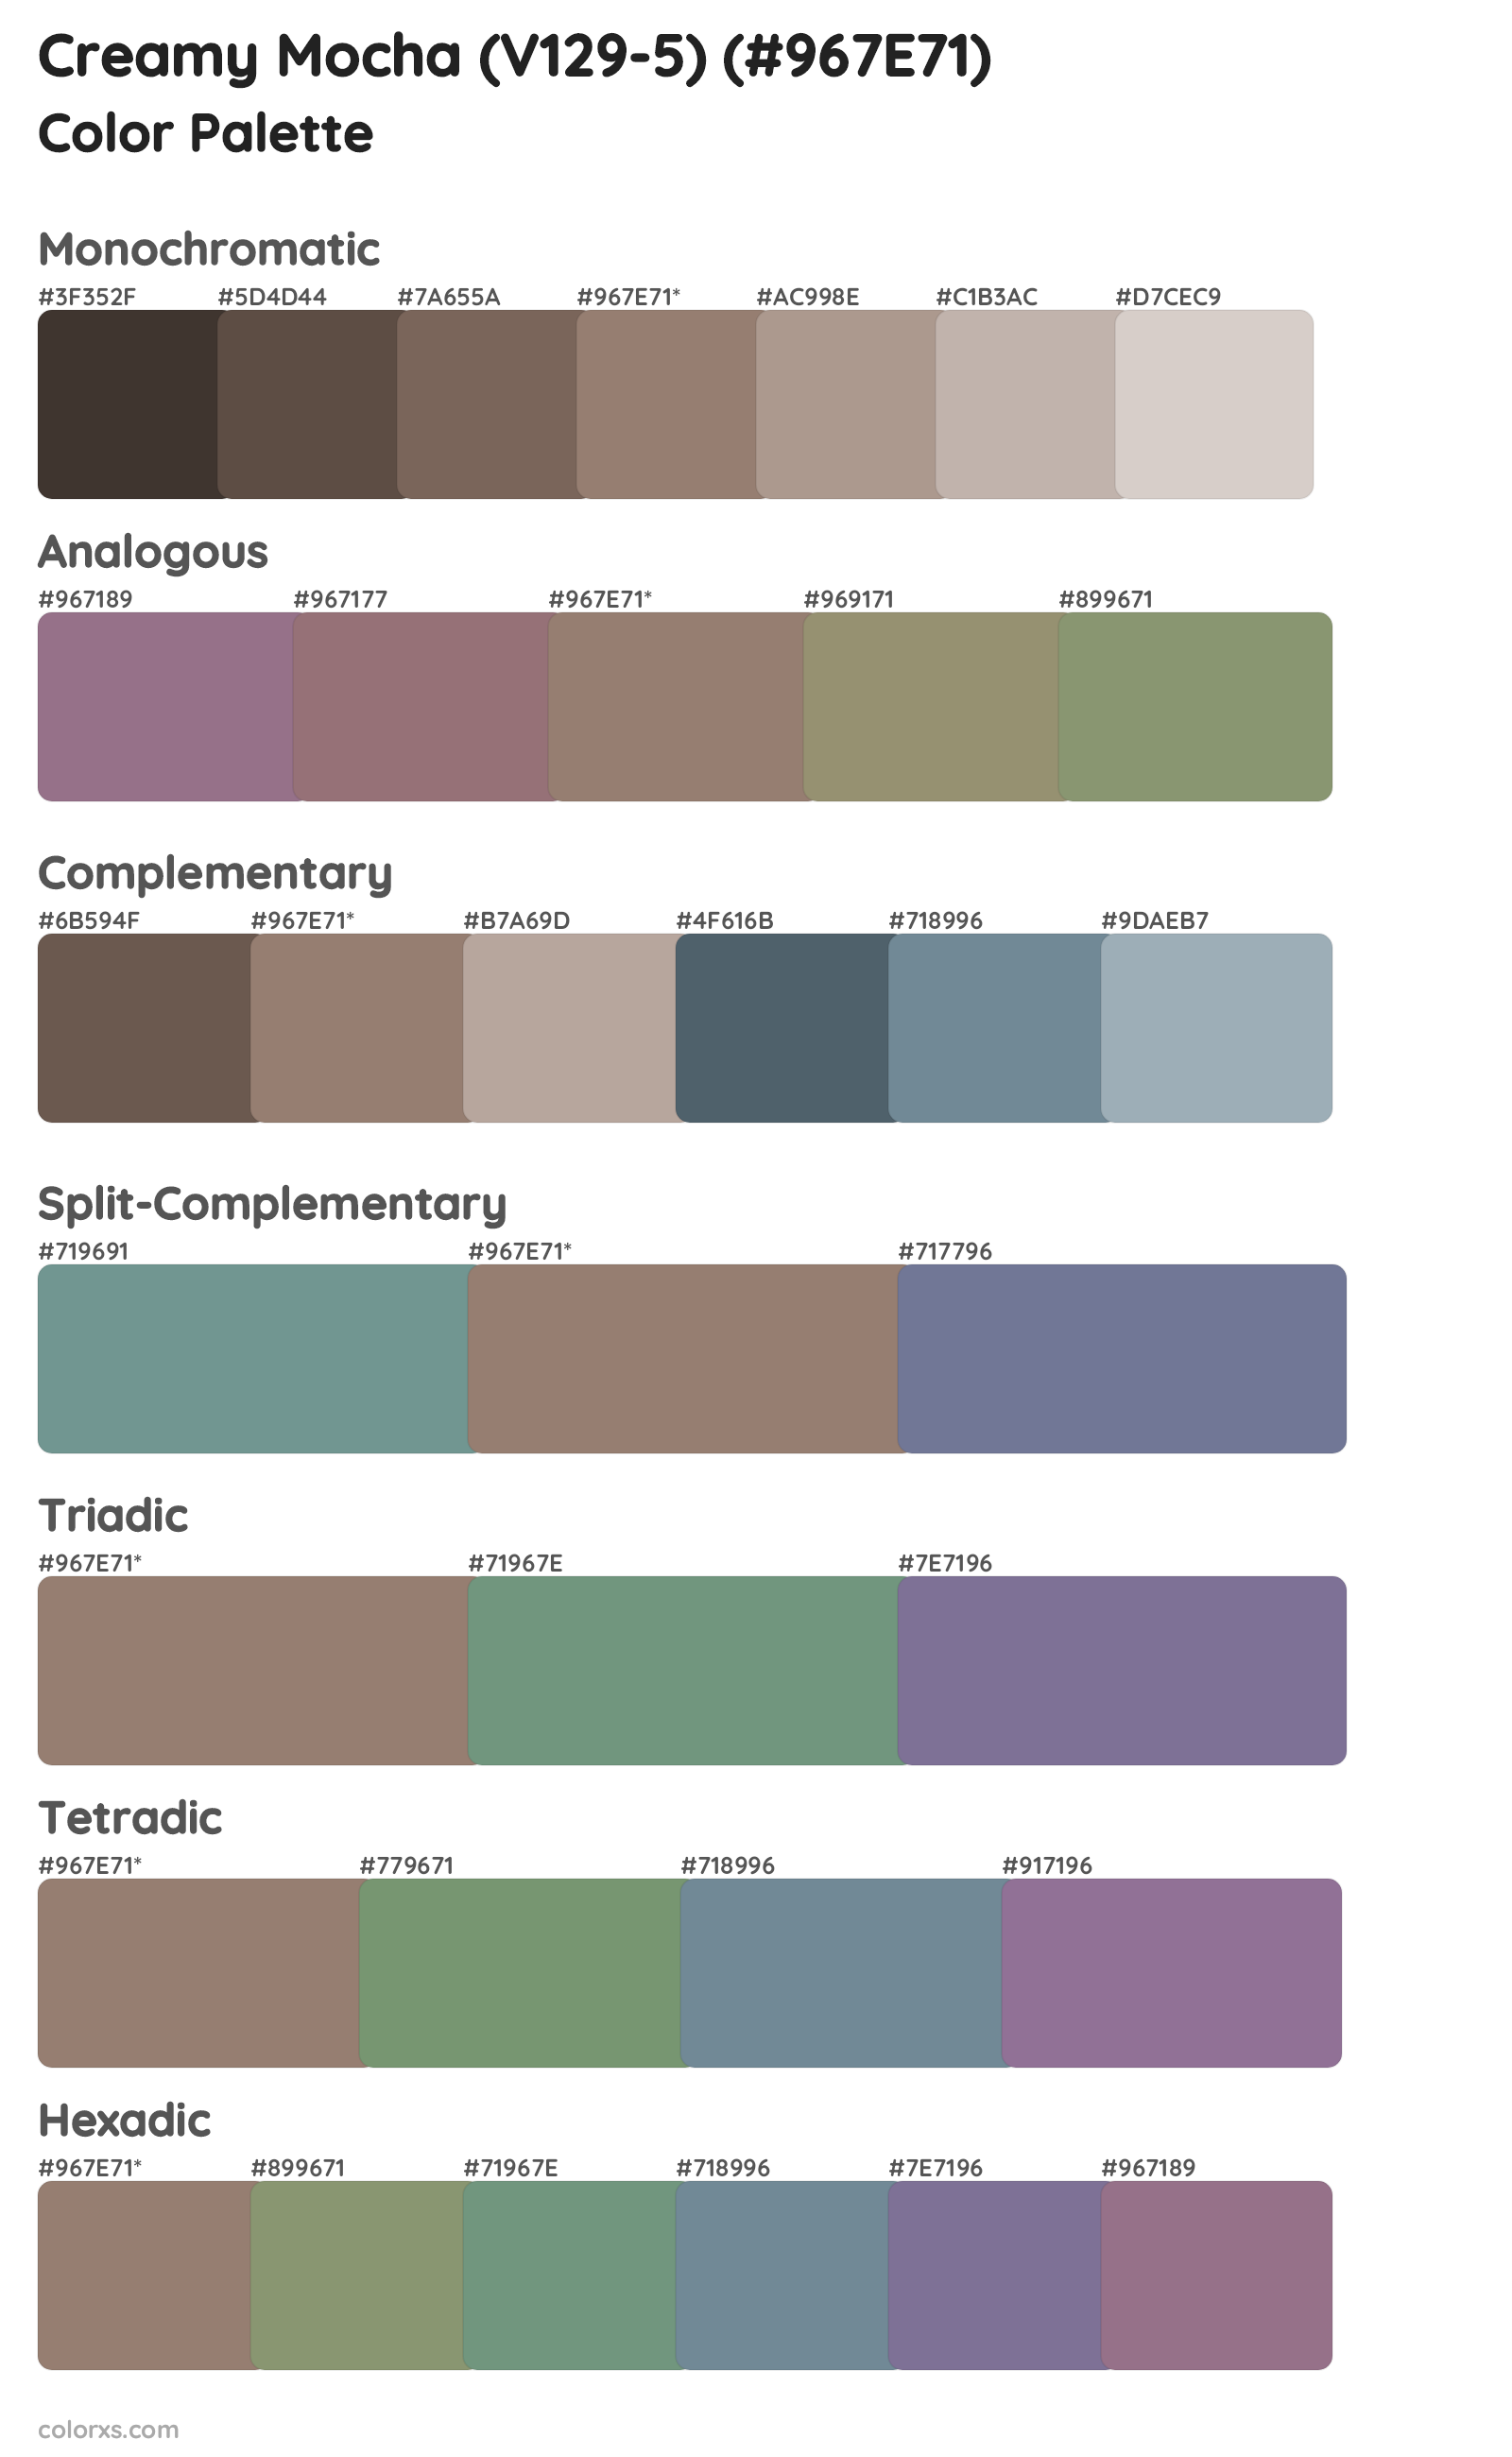 Creamy Mocha (V129-5) Color Scheme Palettes